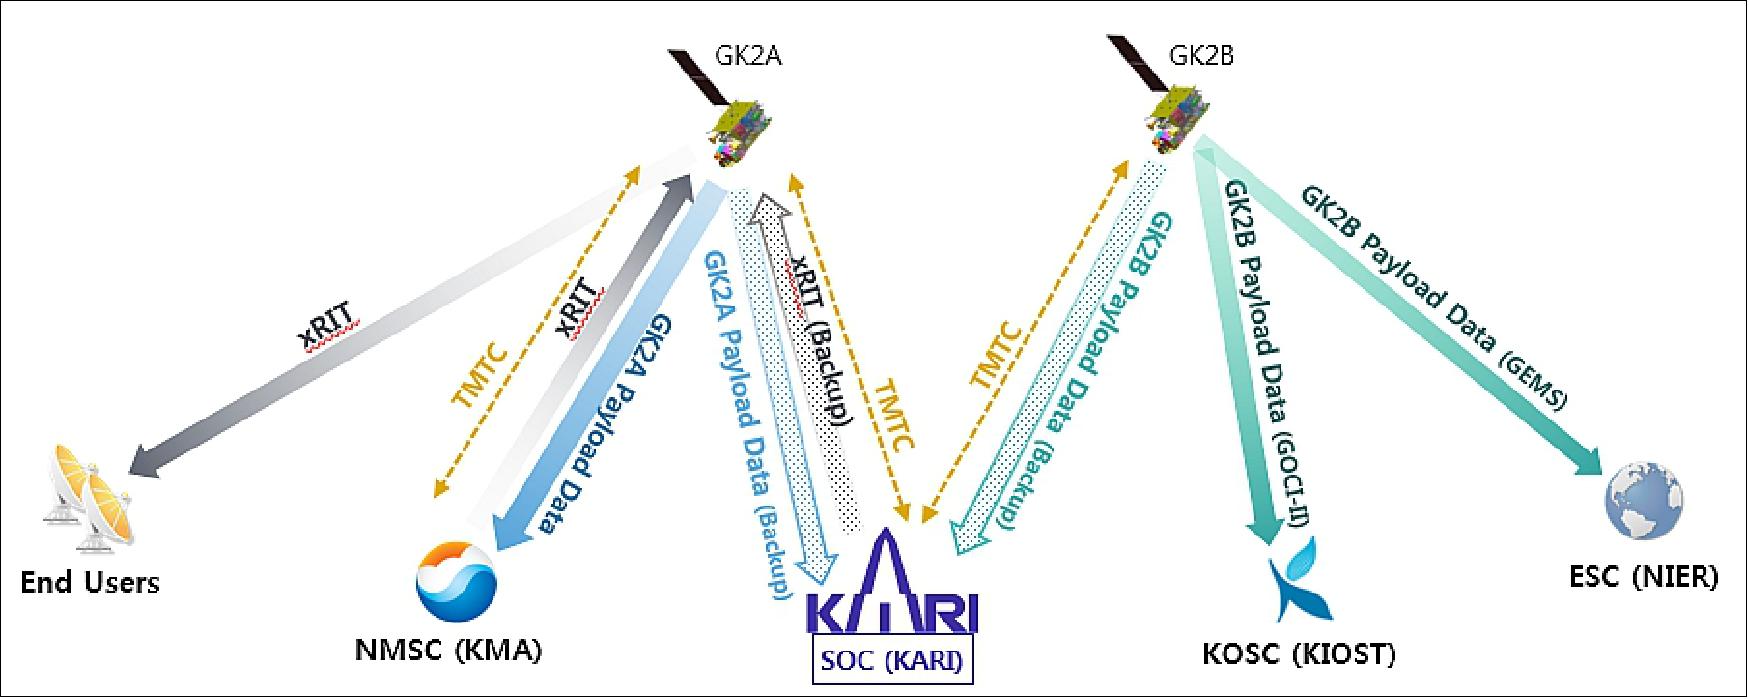 Figure 42: GK2A/2B Ground Centers (image credit: KARI)